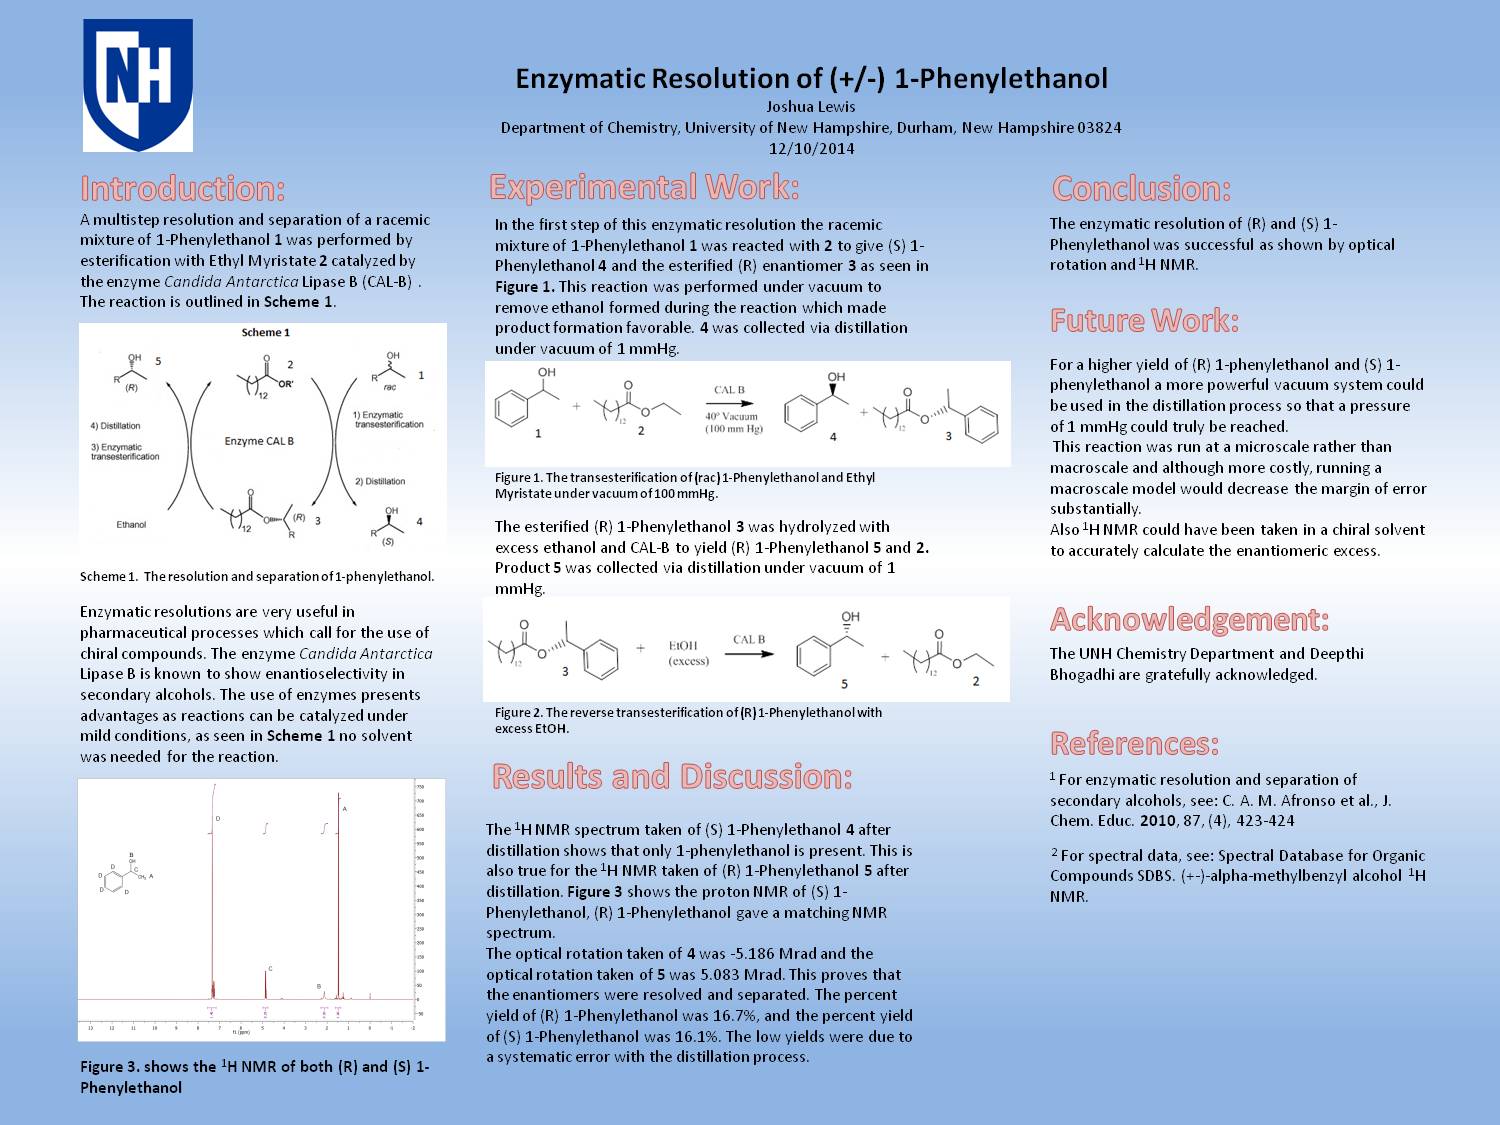 Enzymatic Resolution by jjm73